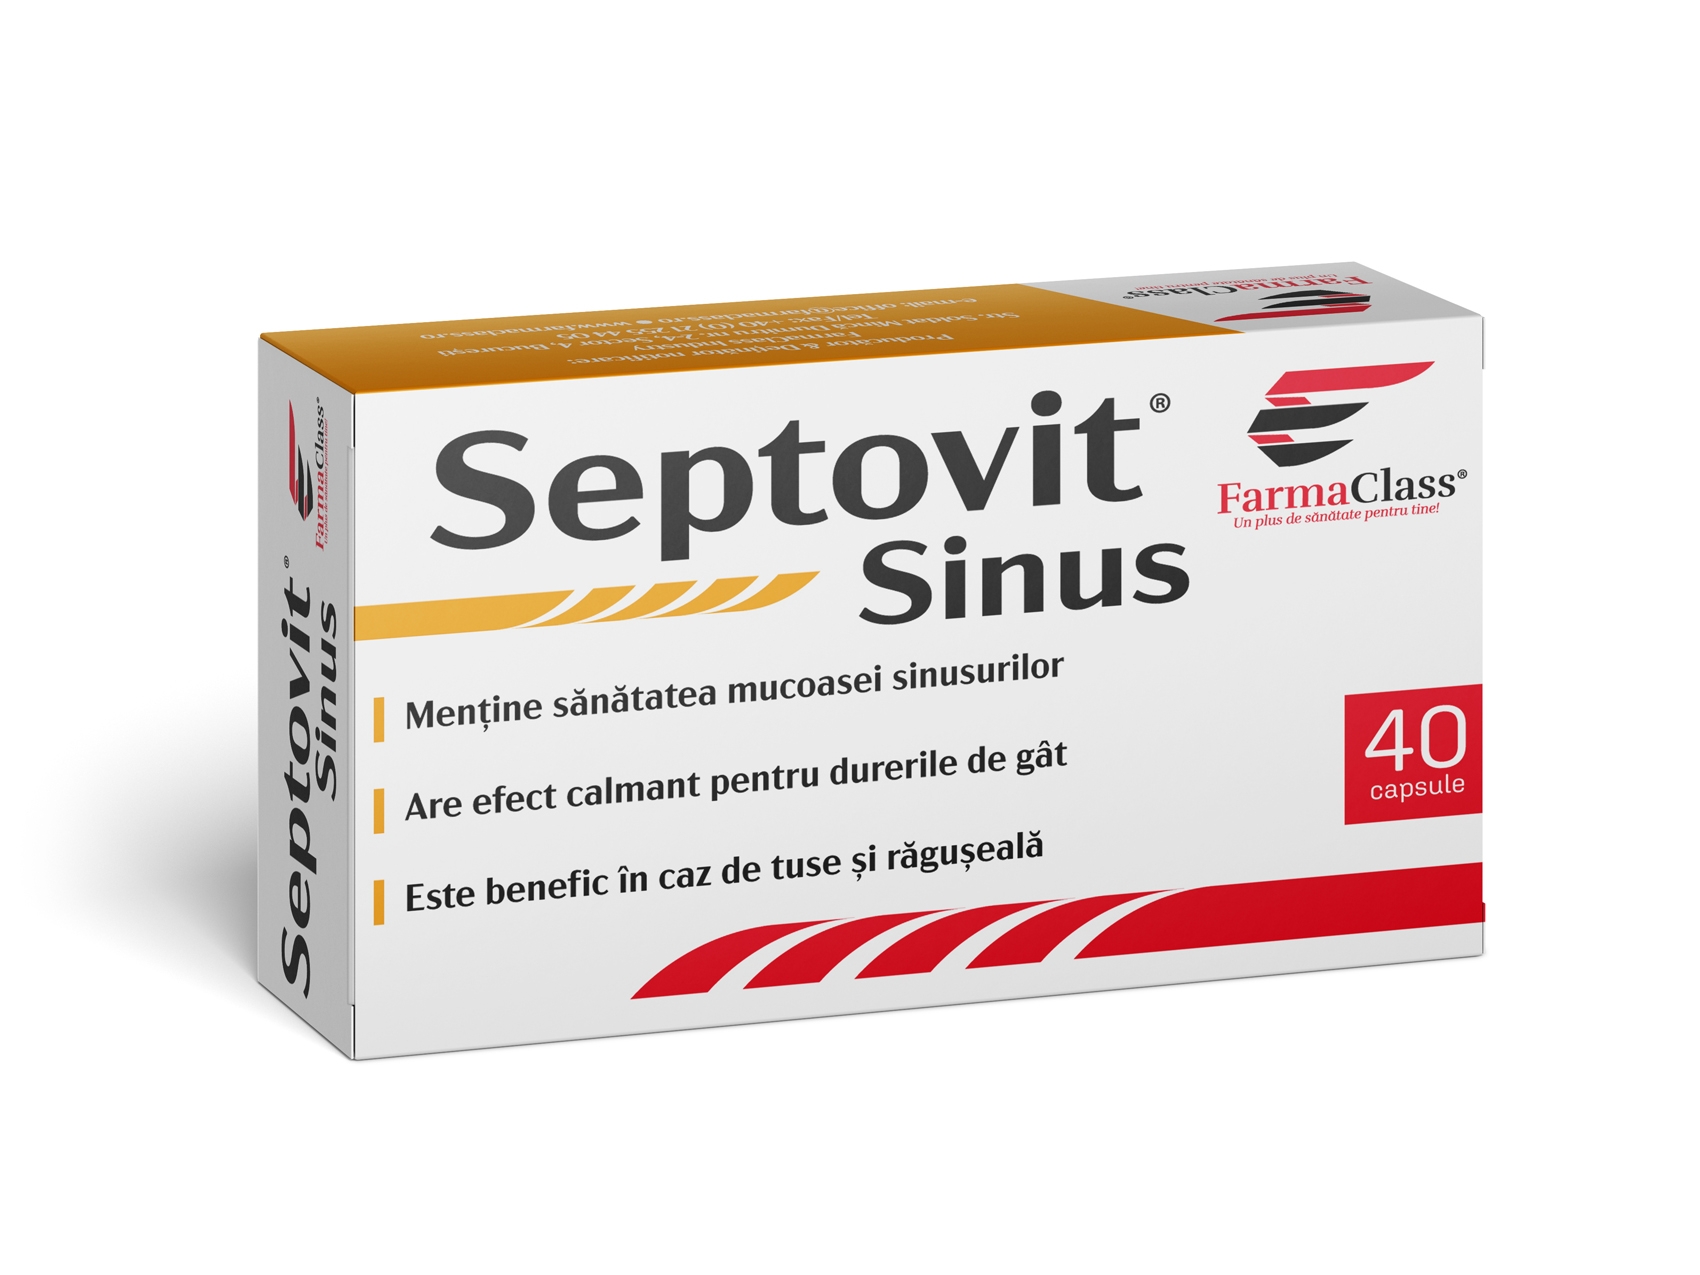 Respiratie usoara - Septovit Sinus 40 capsule, FarmaClass, sinapis.ro